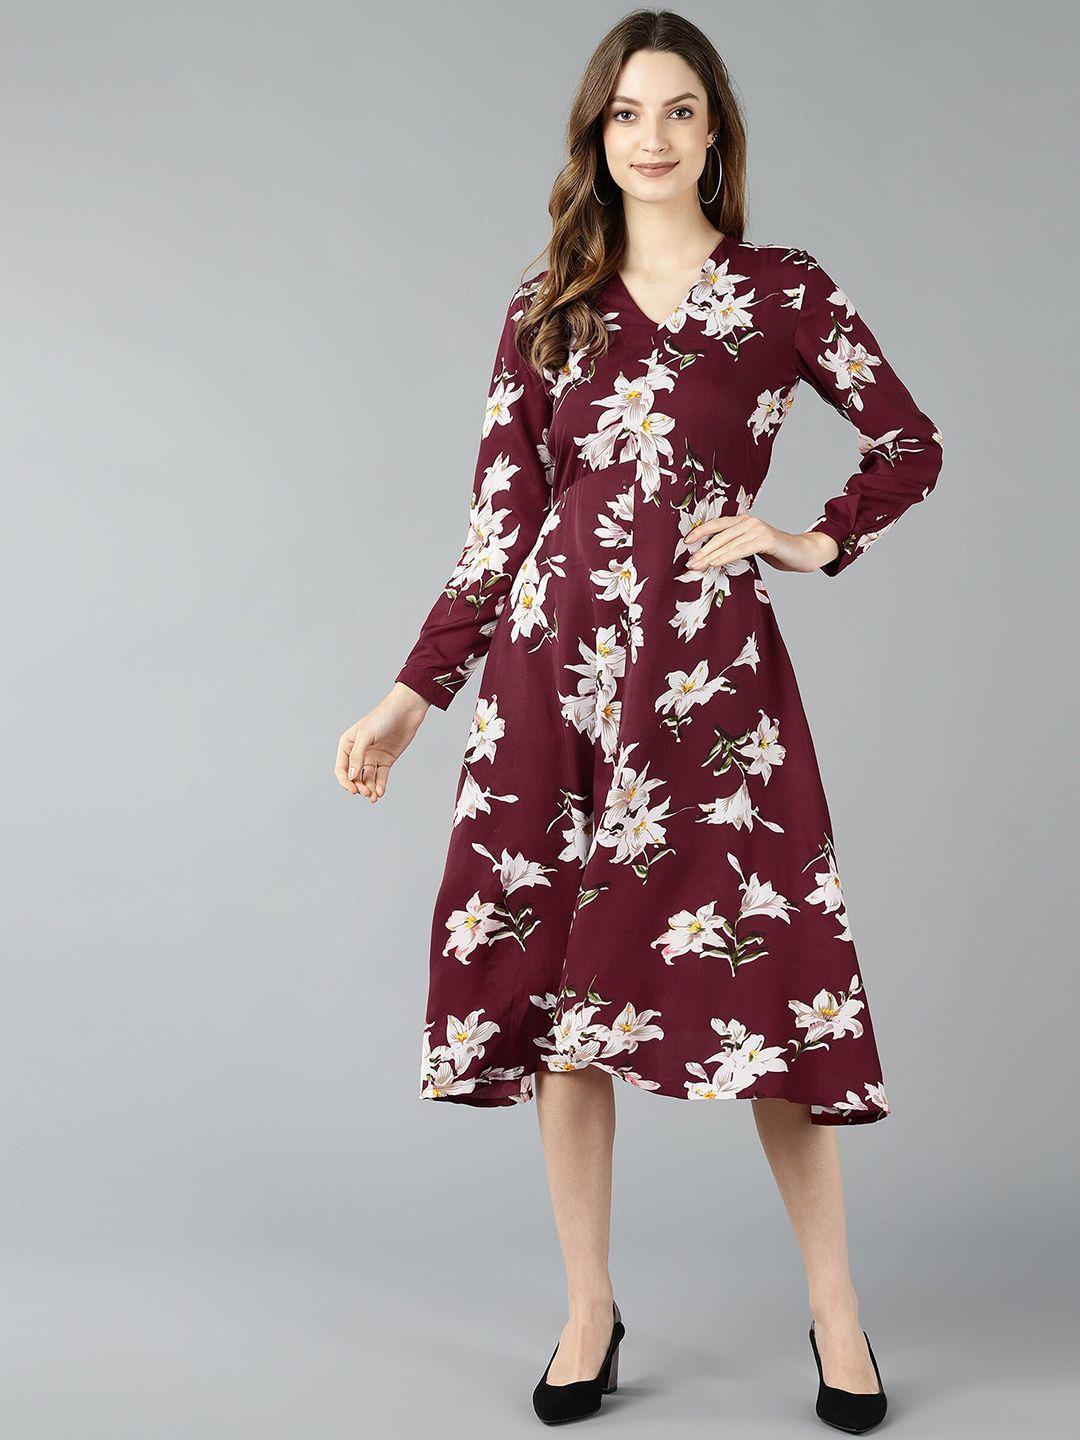 znx clothing maroon floral printed crepe a-line midi dress